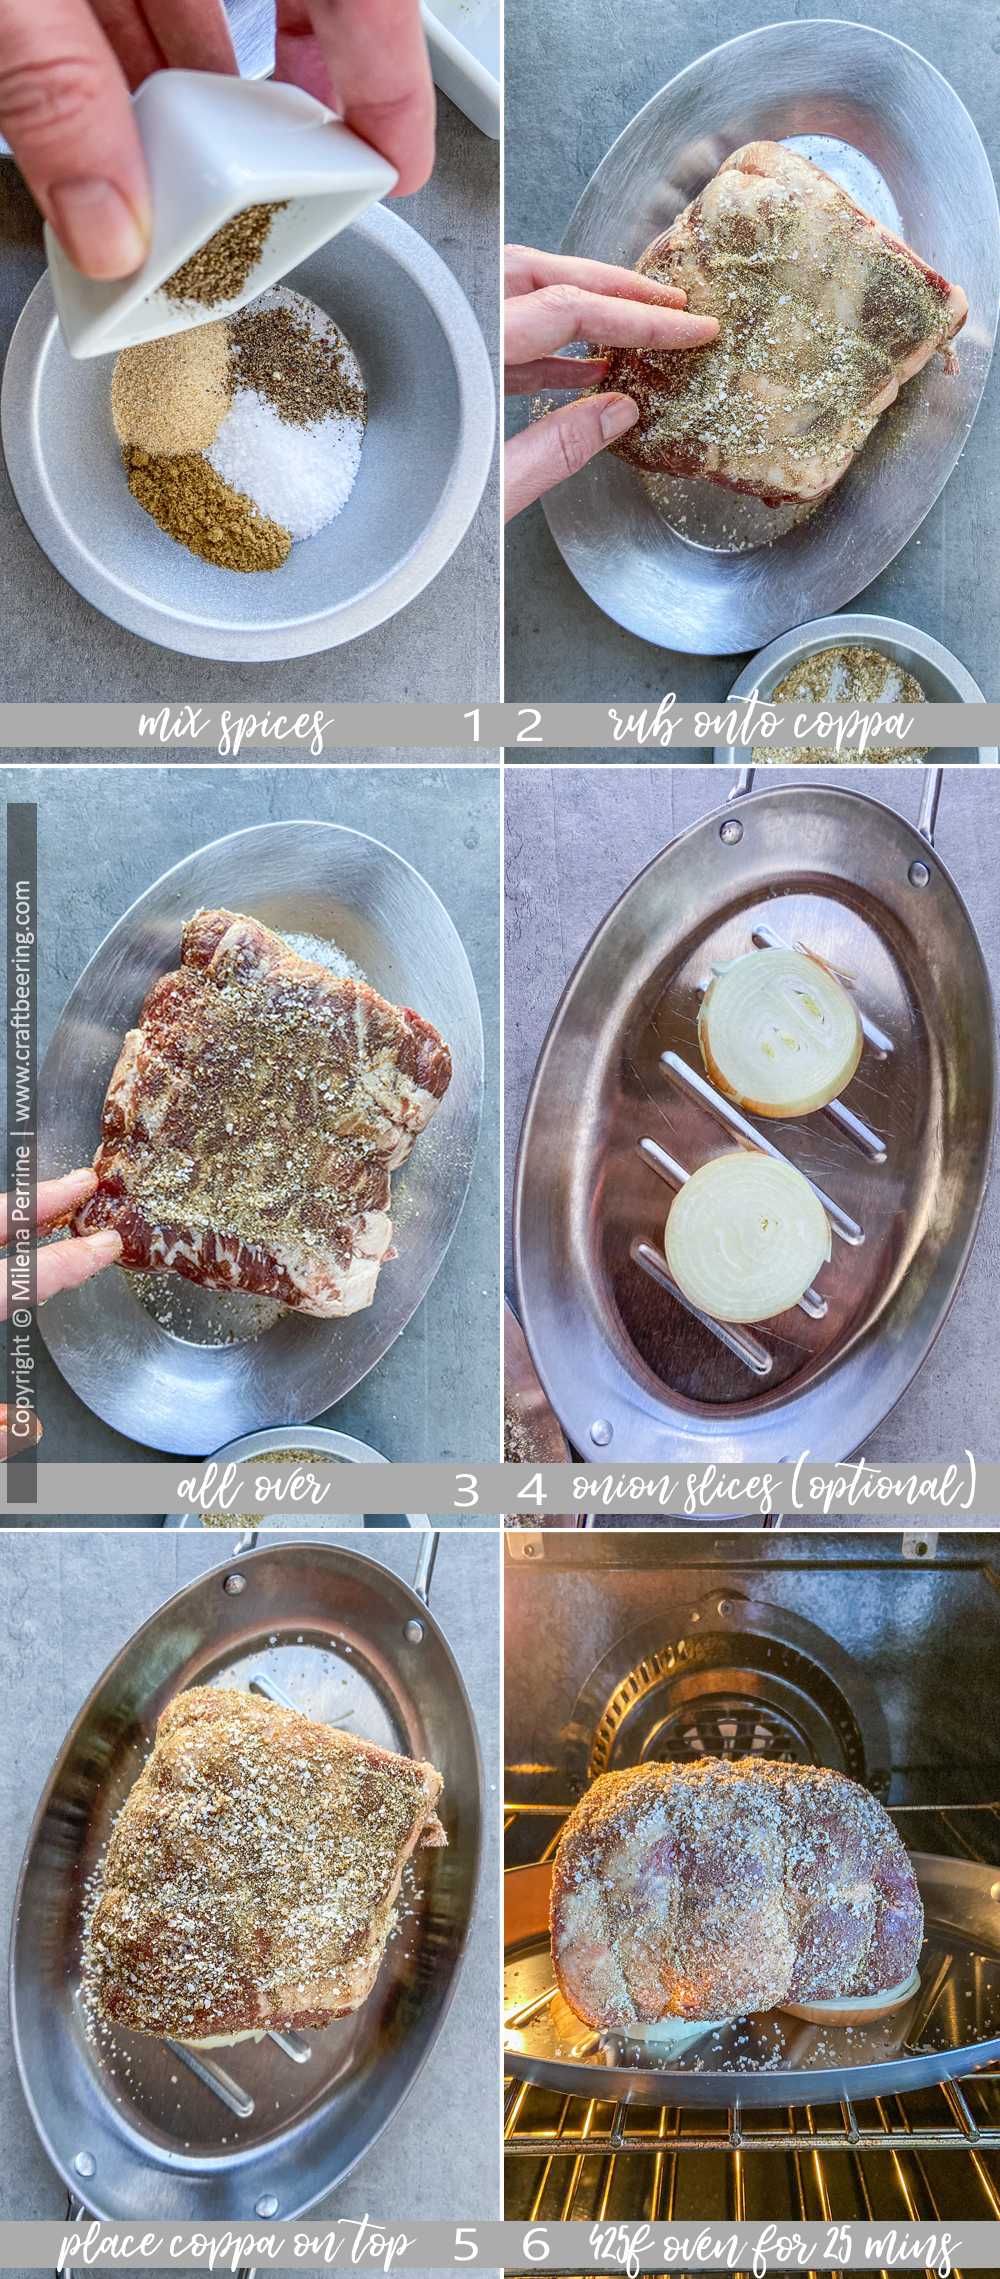 How to cook pork collar (coppa roast).